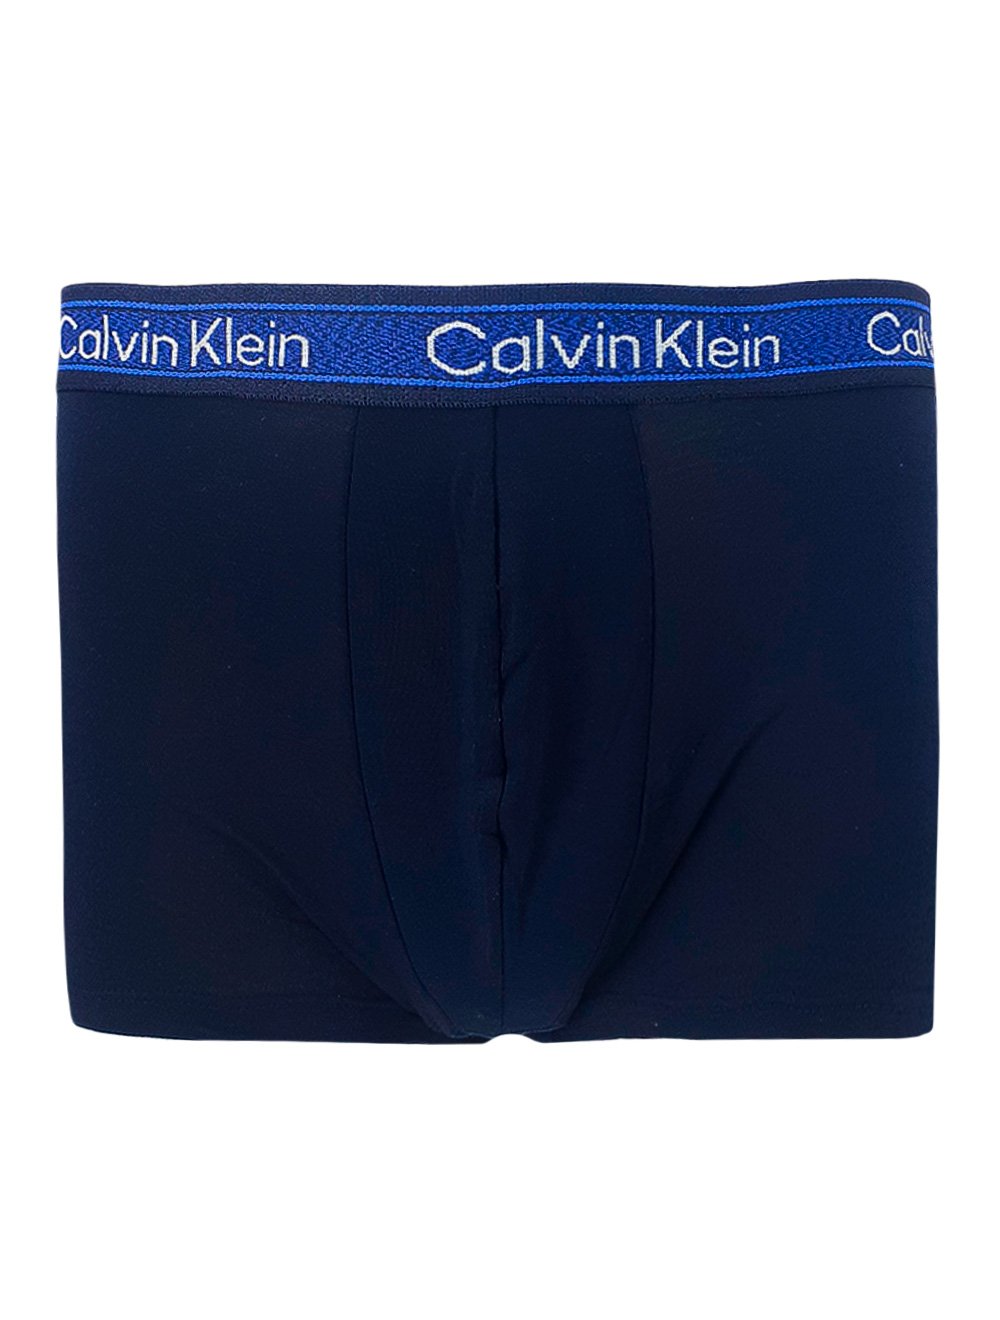 Cueca Calvin Klein Trunk Modal Stripe Azul Marinho C10.12 AZ06 1UN